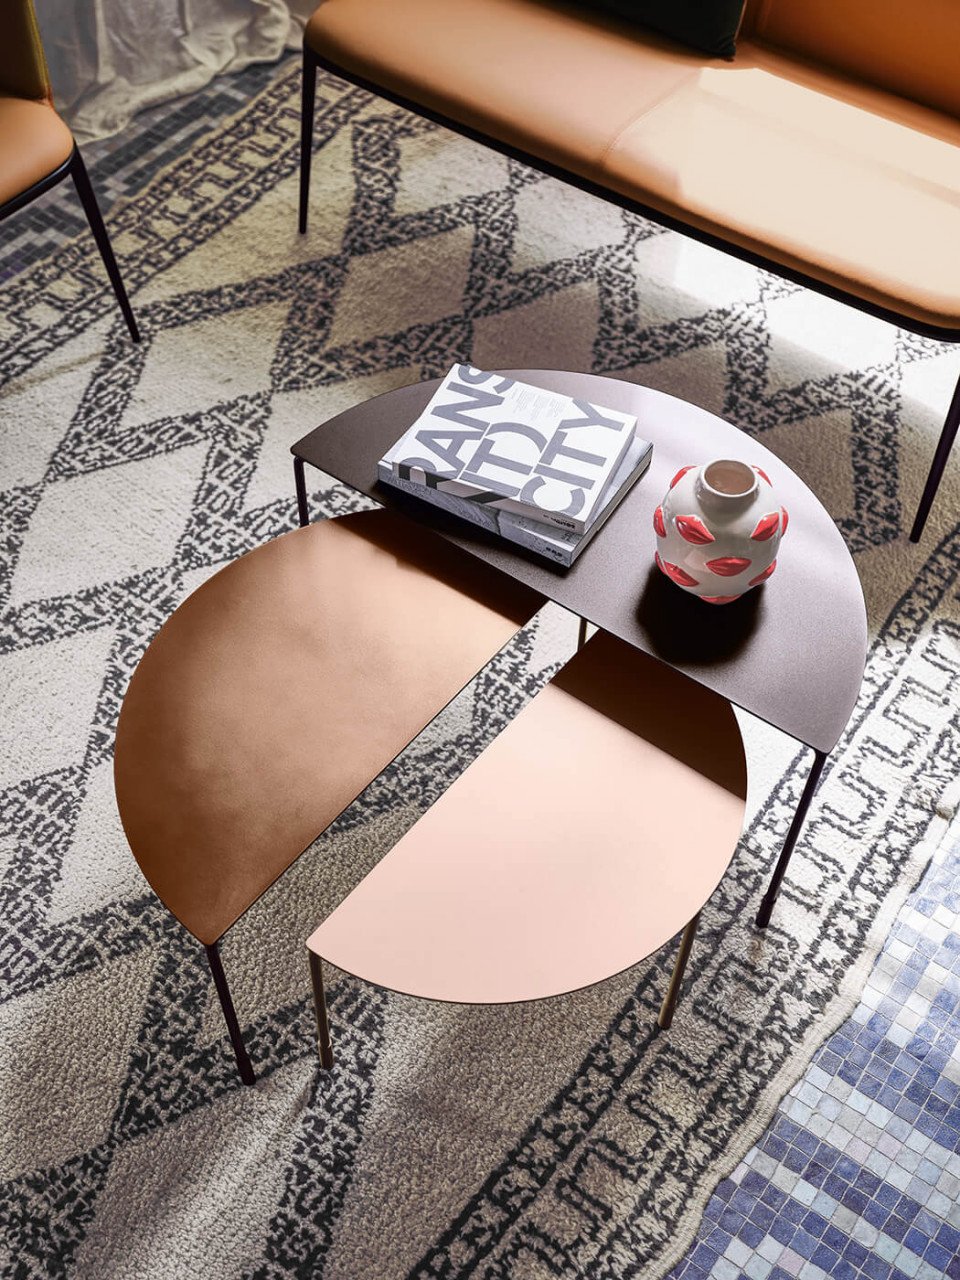 Hoodi Coffee Table from Midj, designed by Roberto Paoli